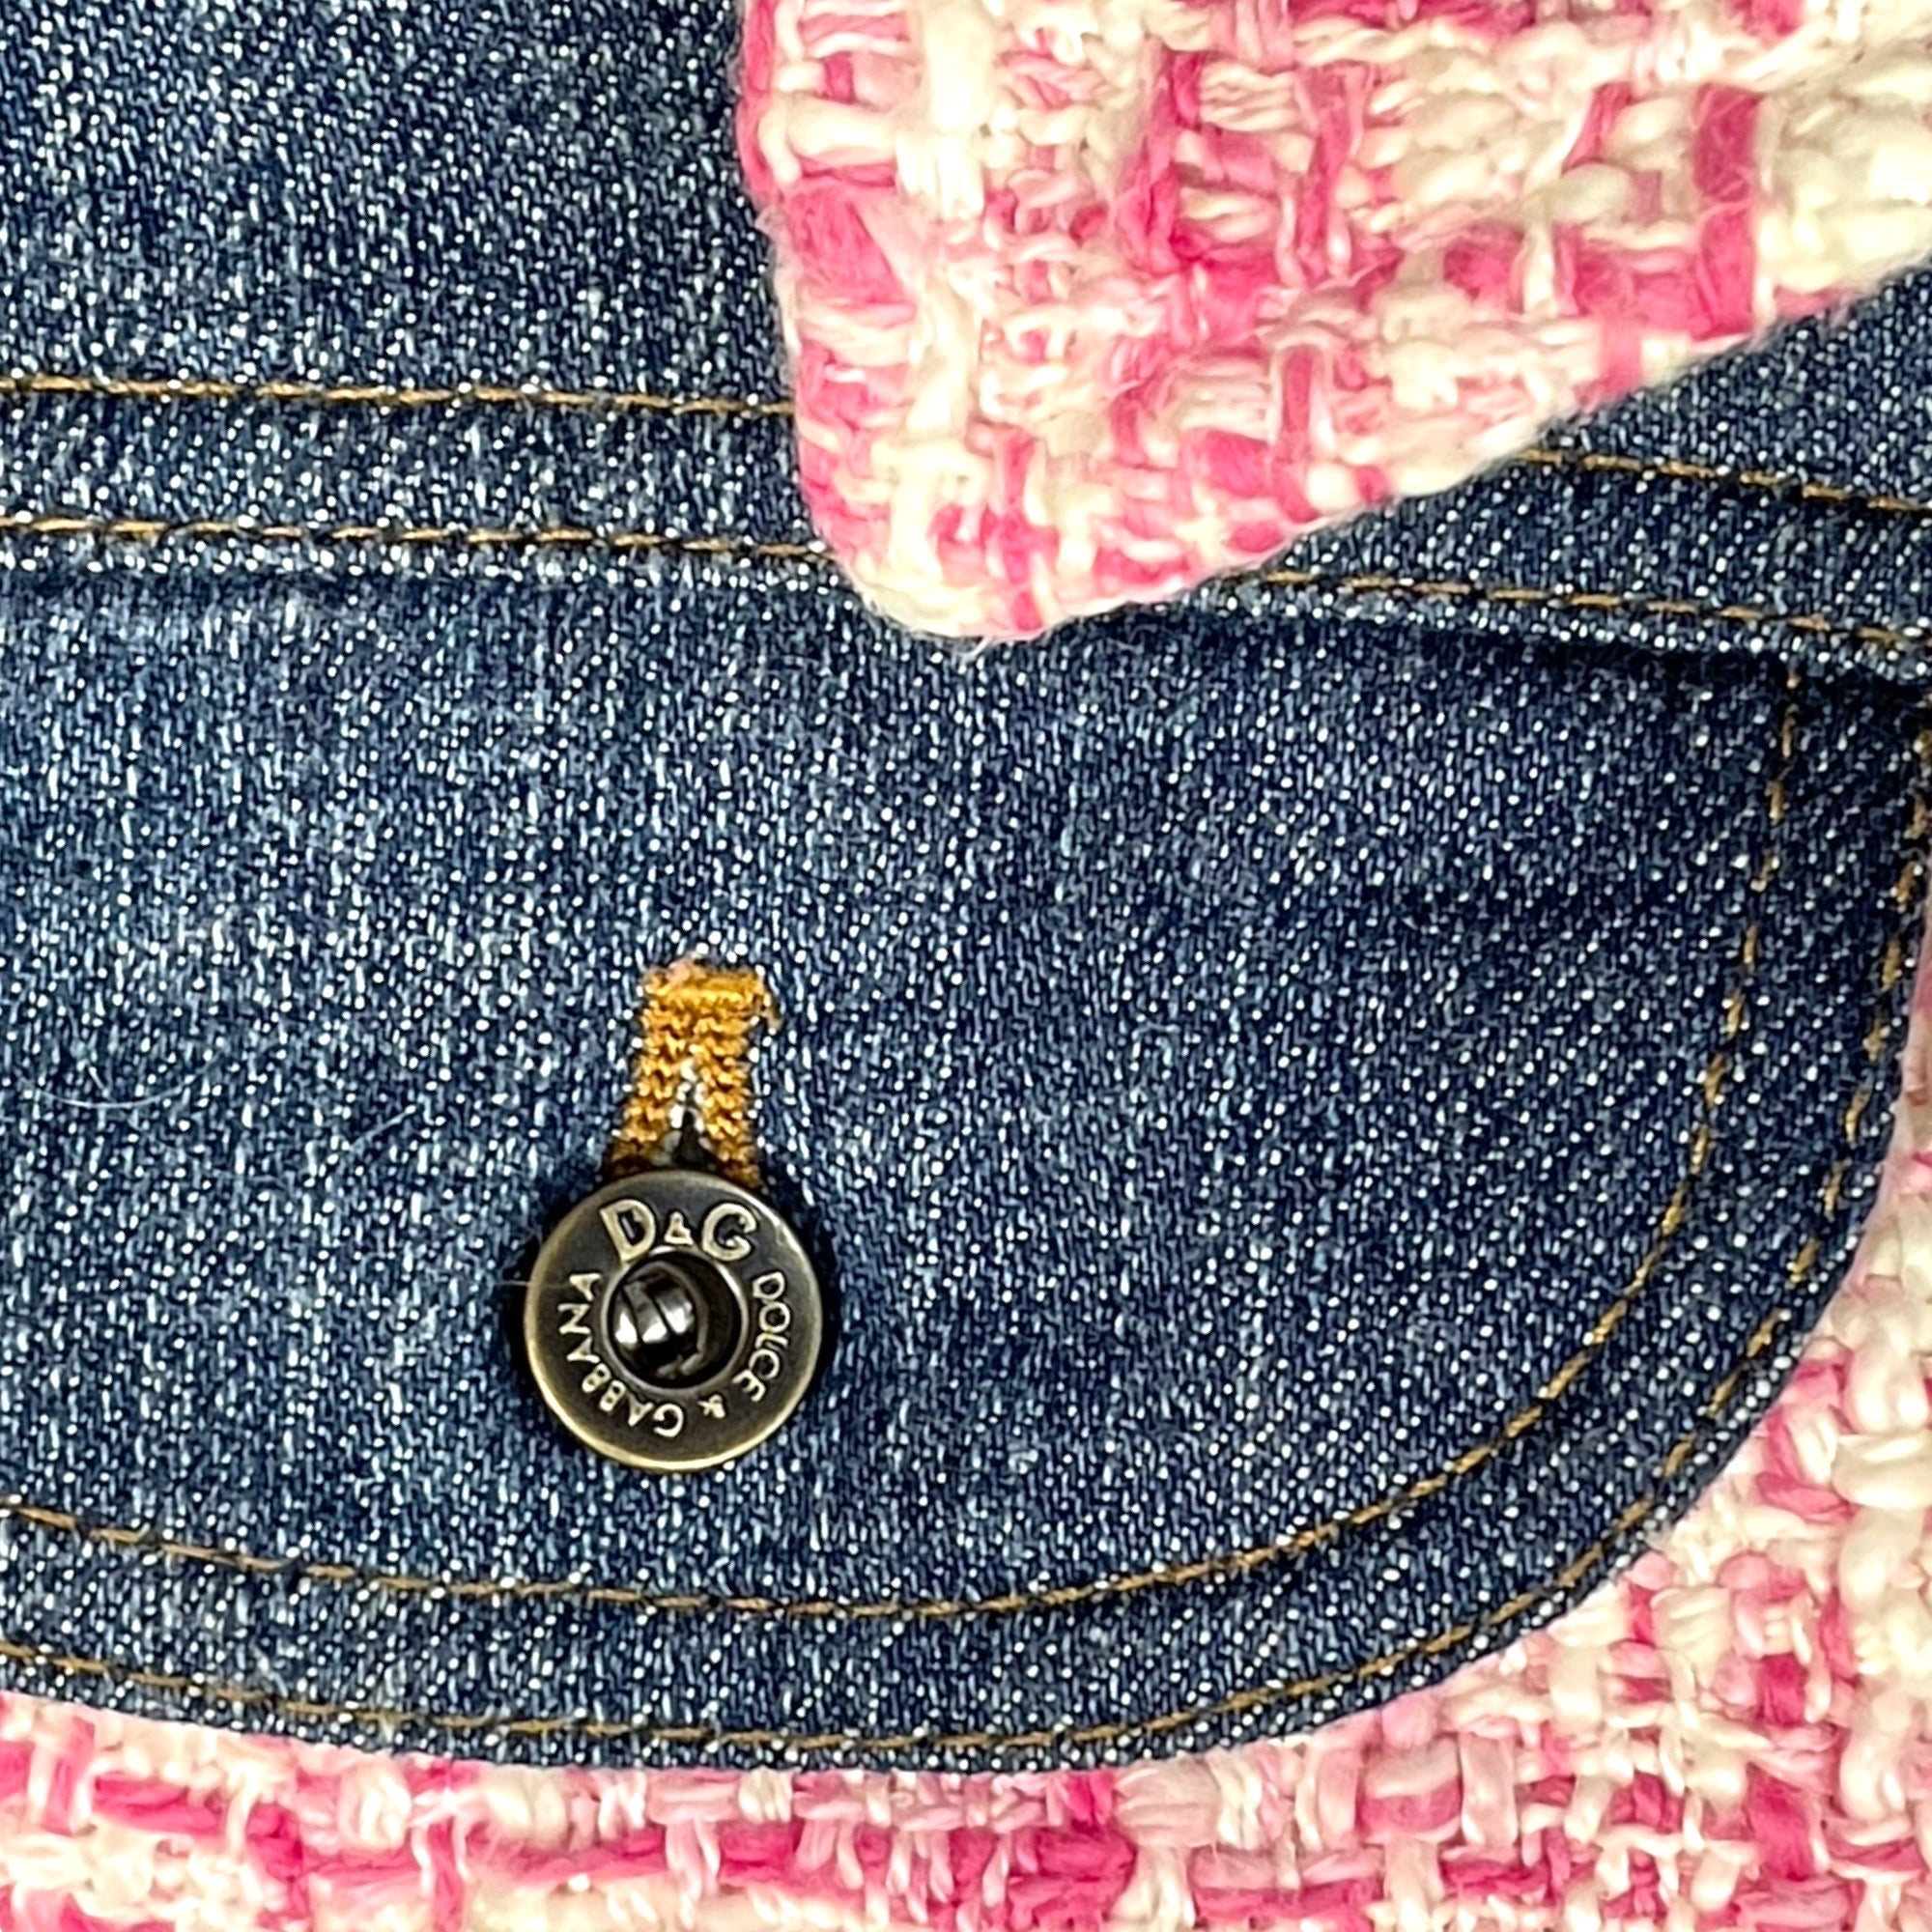 DOLCE & GABBANA Pink Tweed & Denim Fitted Jacket | Size: 38 |